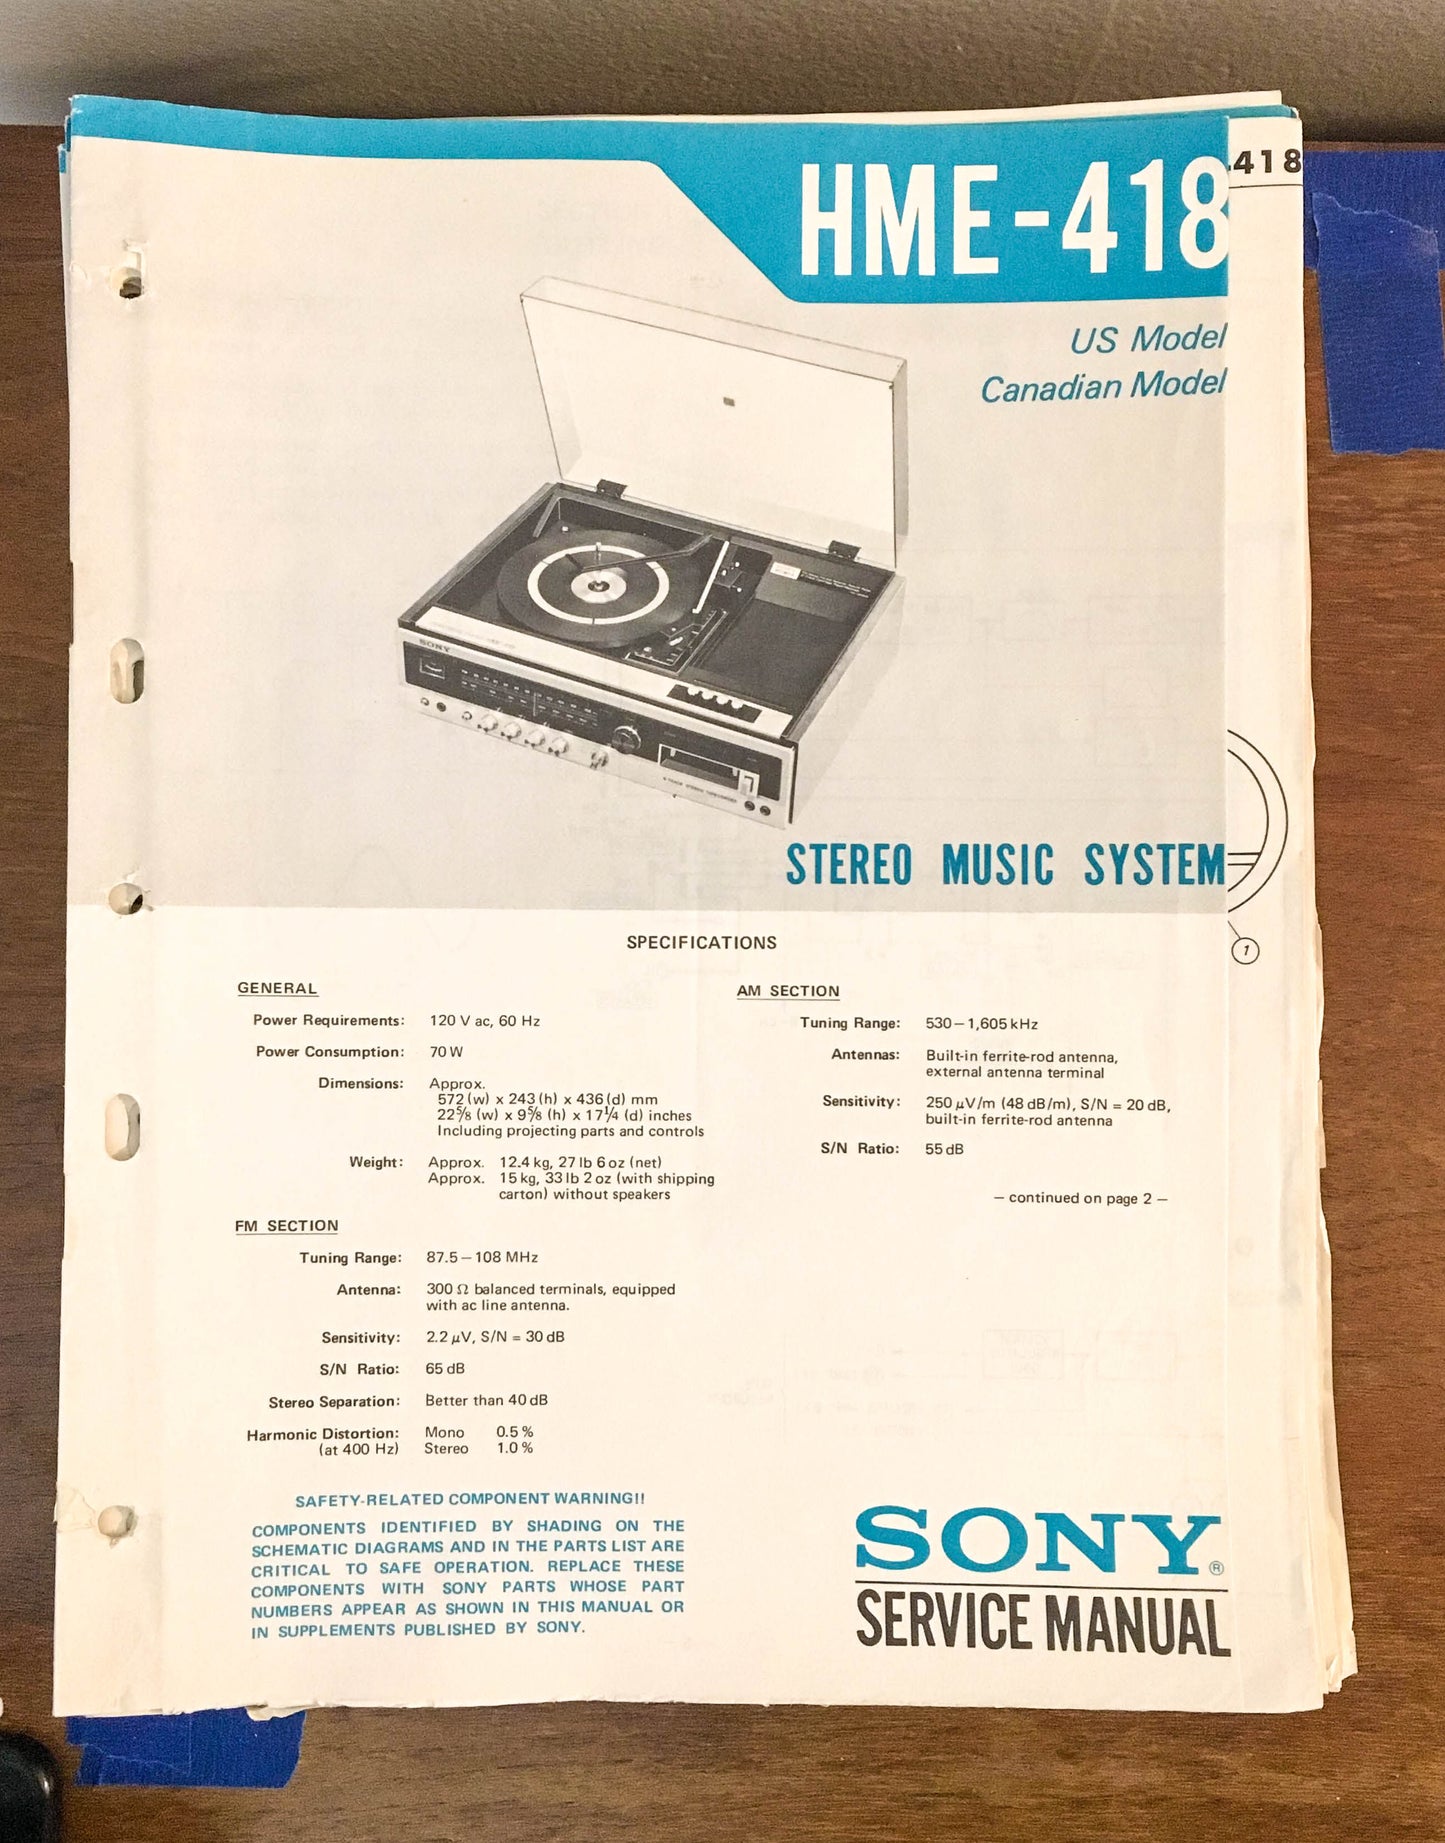 Sony HME-418 Stereo Music System Service Manual *Original*